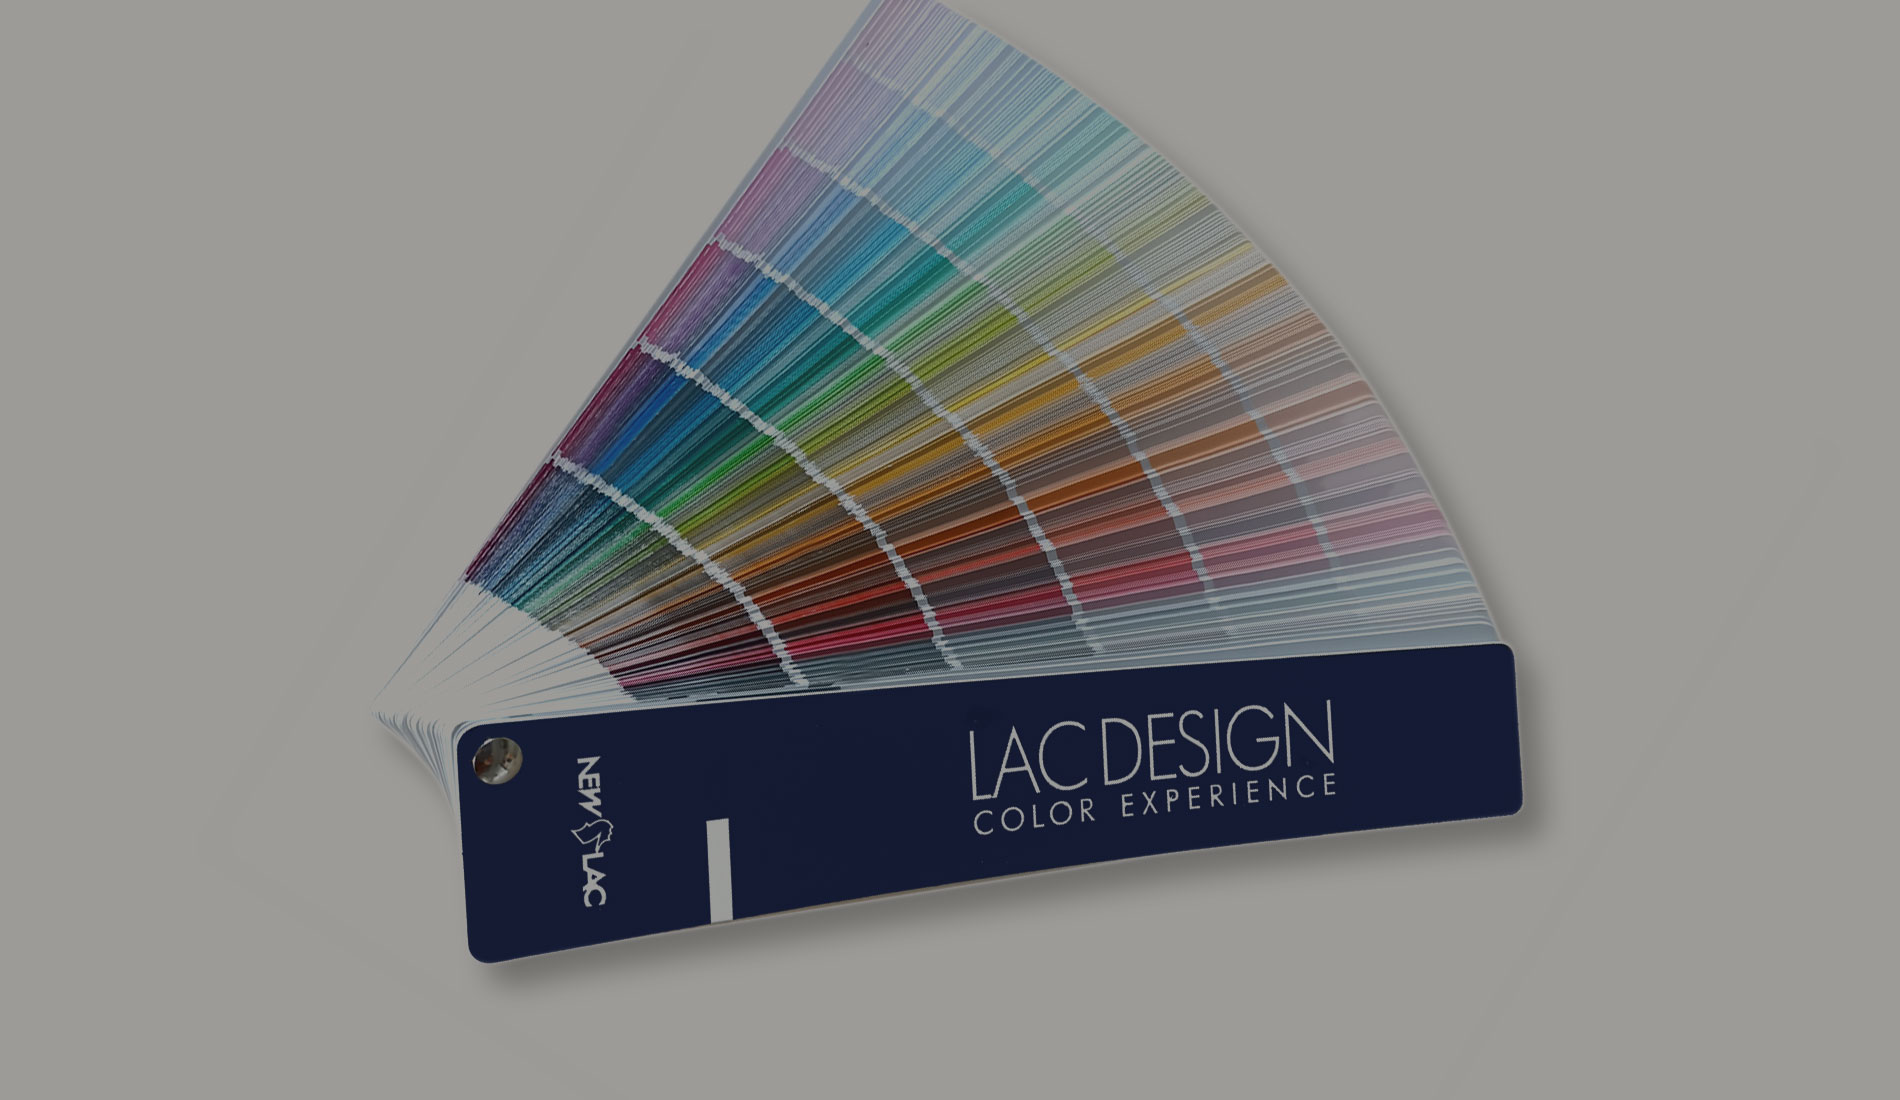 LAC DESIGN color experience